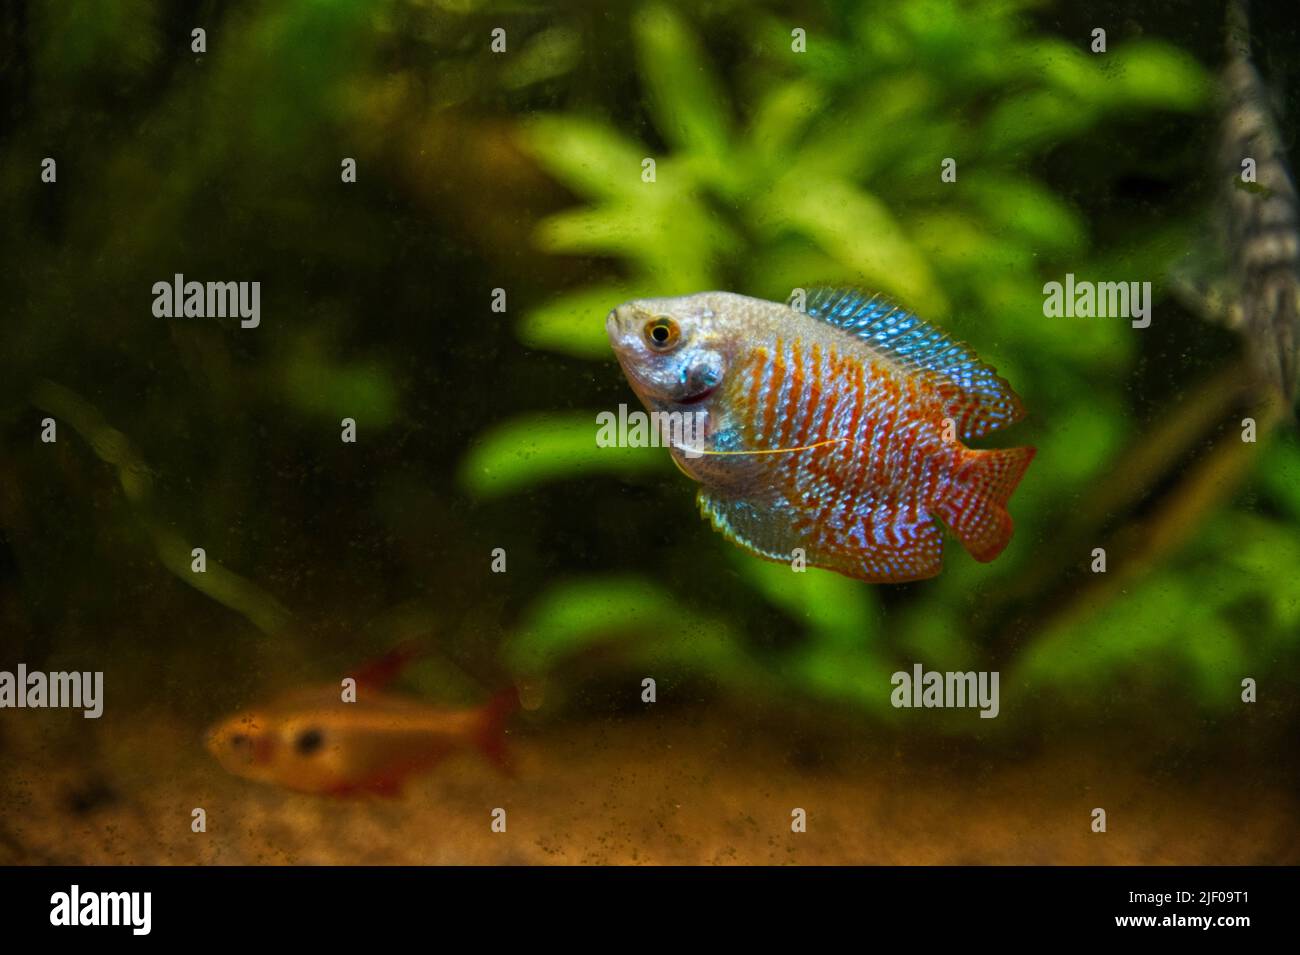 A Dwarf gourami (Colisa lalia) fish swims in an aquarium on a green background Stock Photo